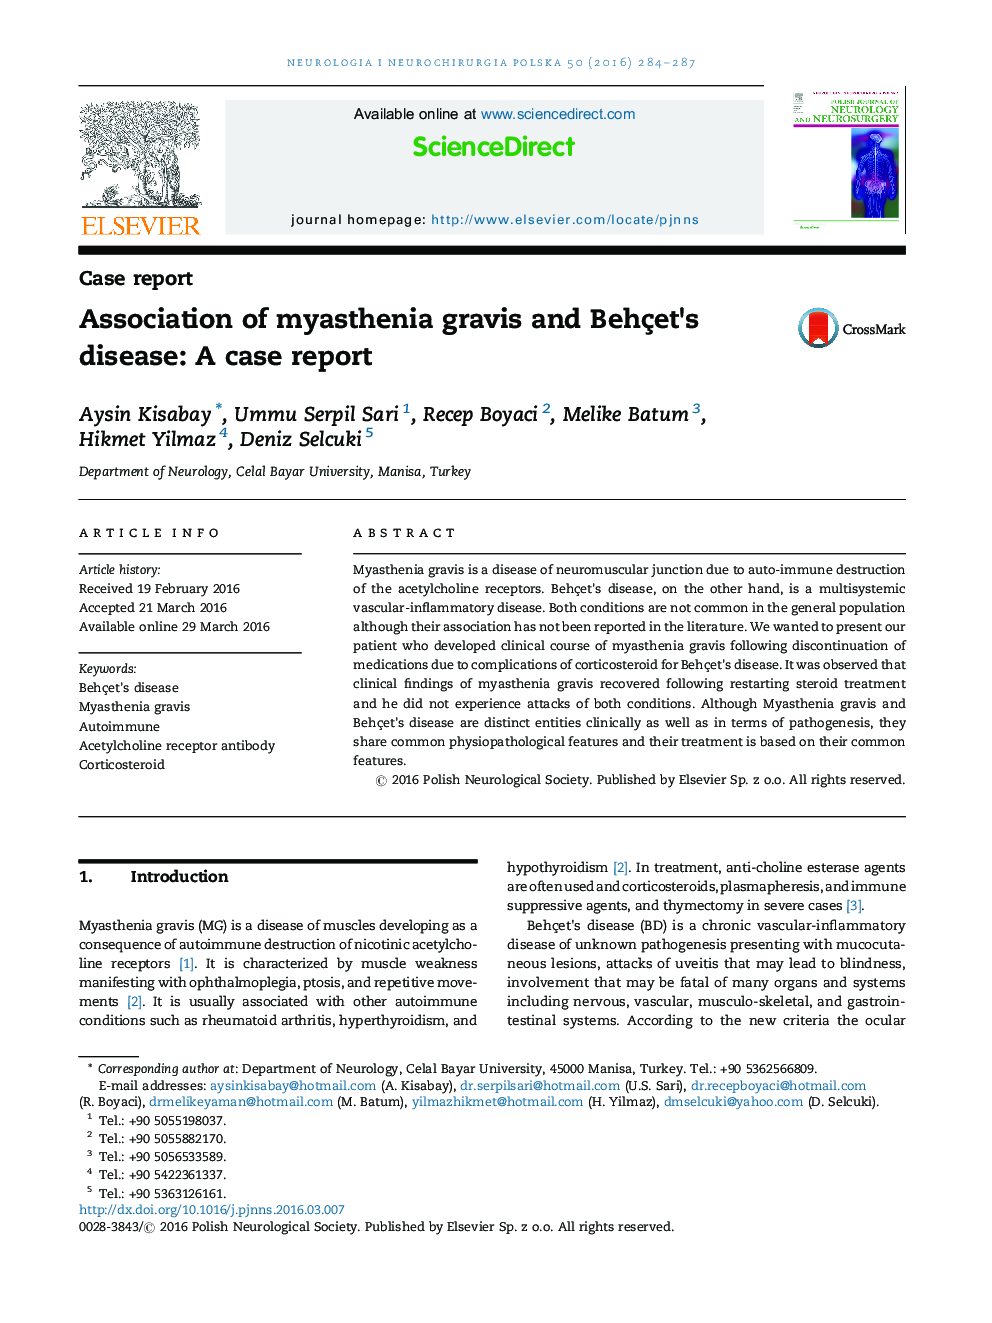 Association of myasthenia gravis and Behçet's disease: A case report